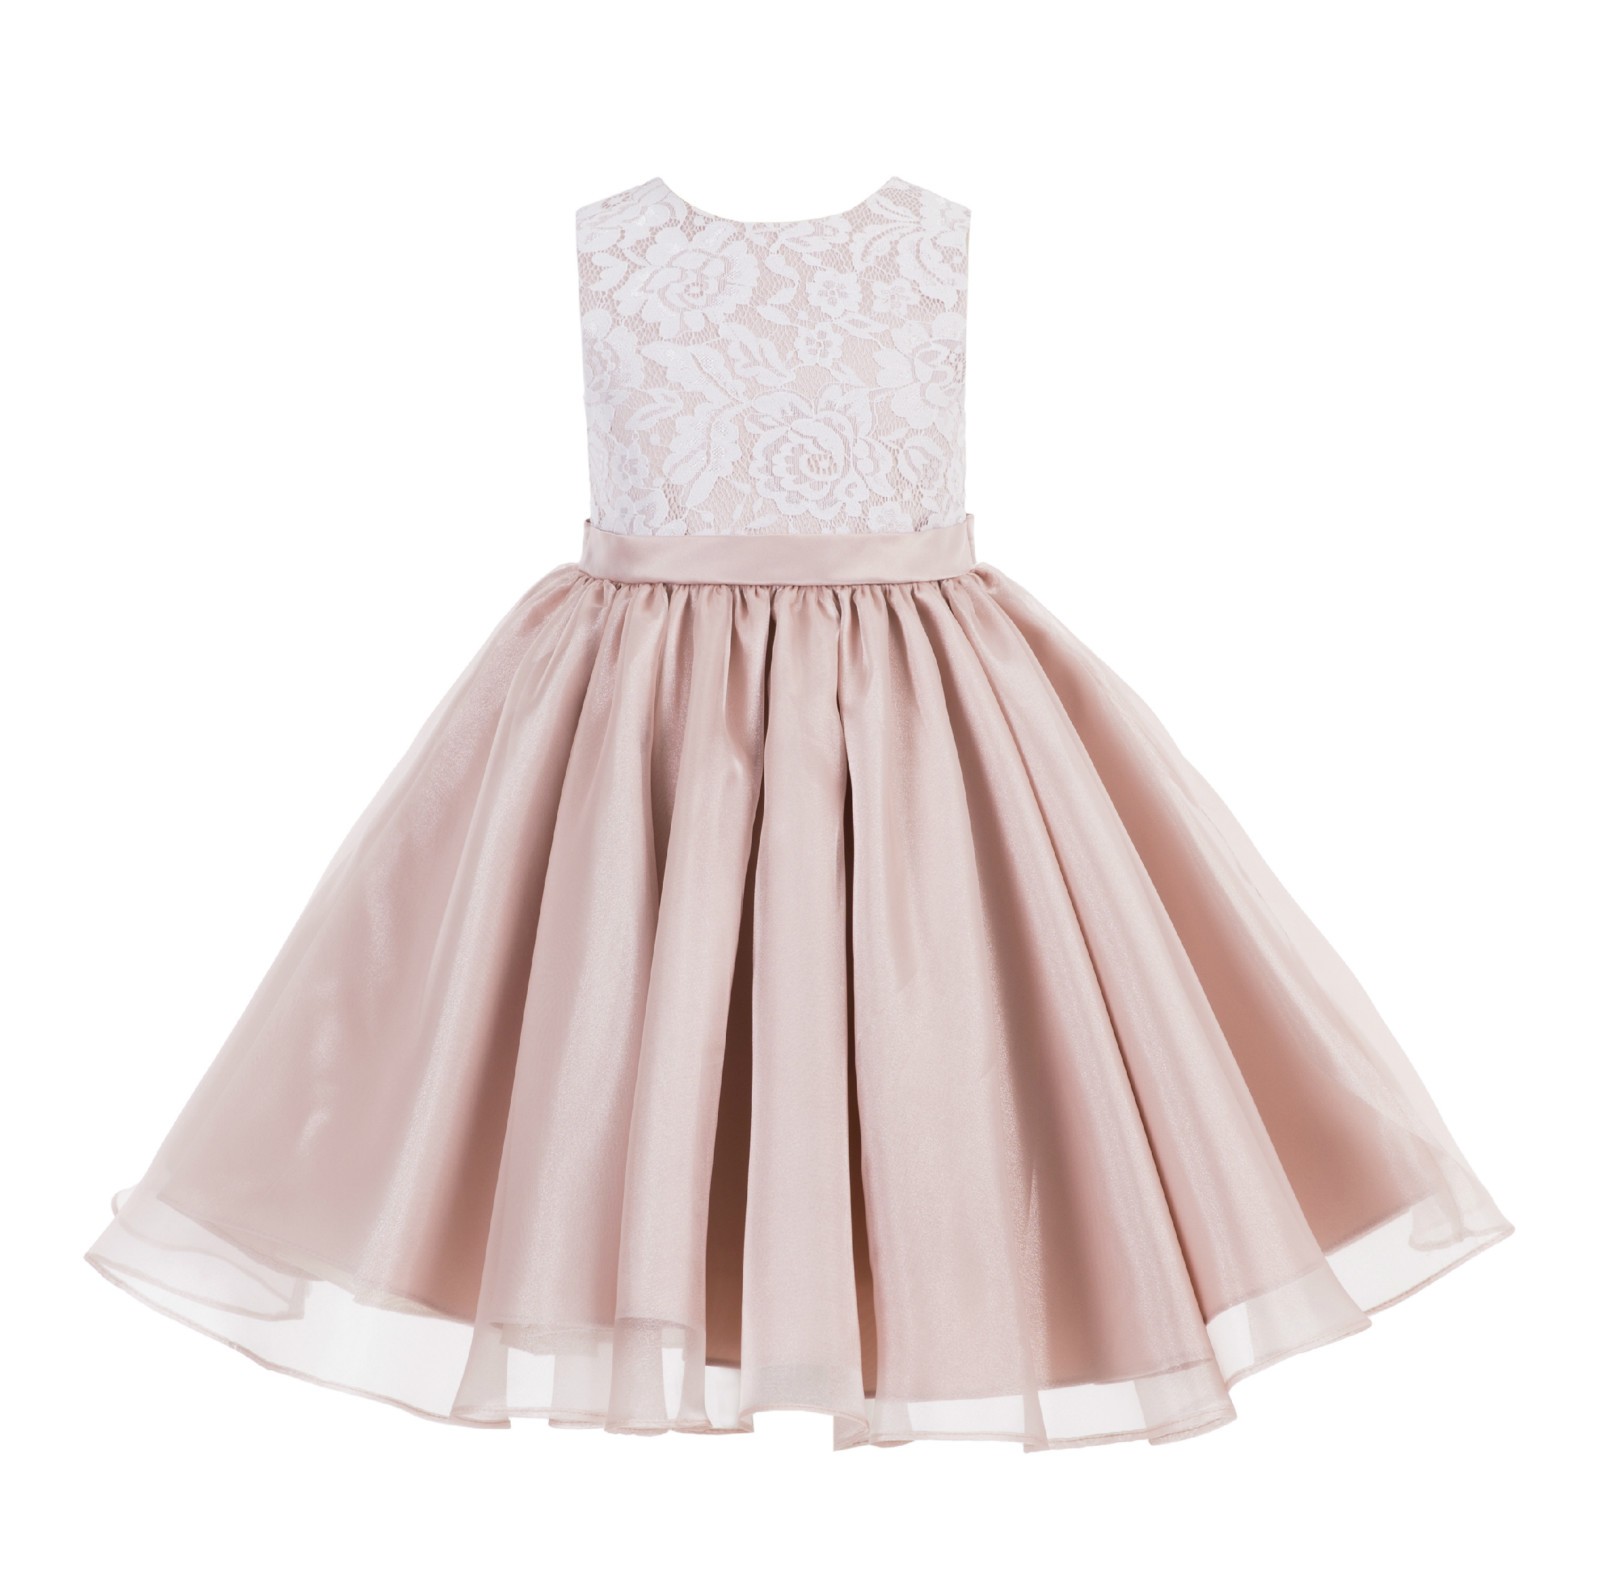 Blush Pink Lace Organza Flower Girl Dress 186